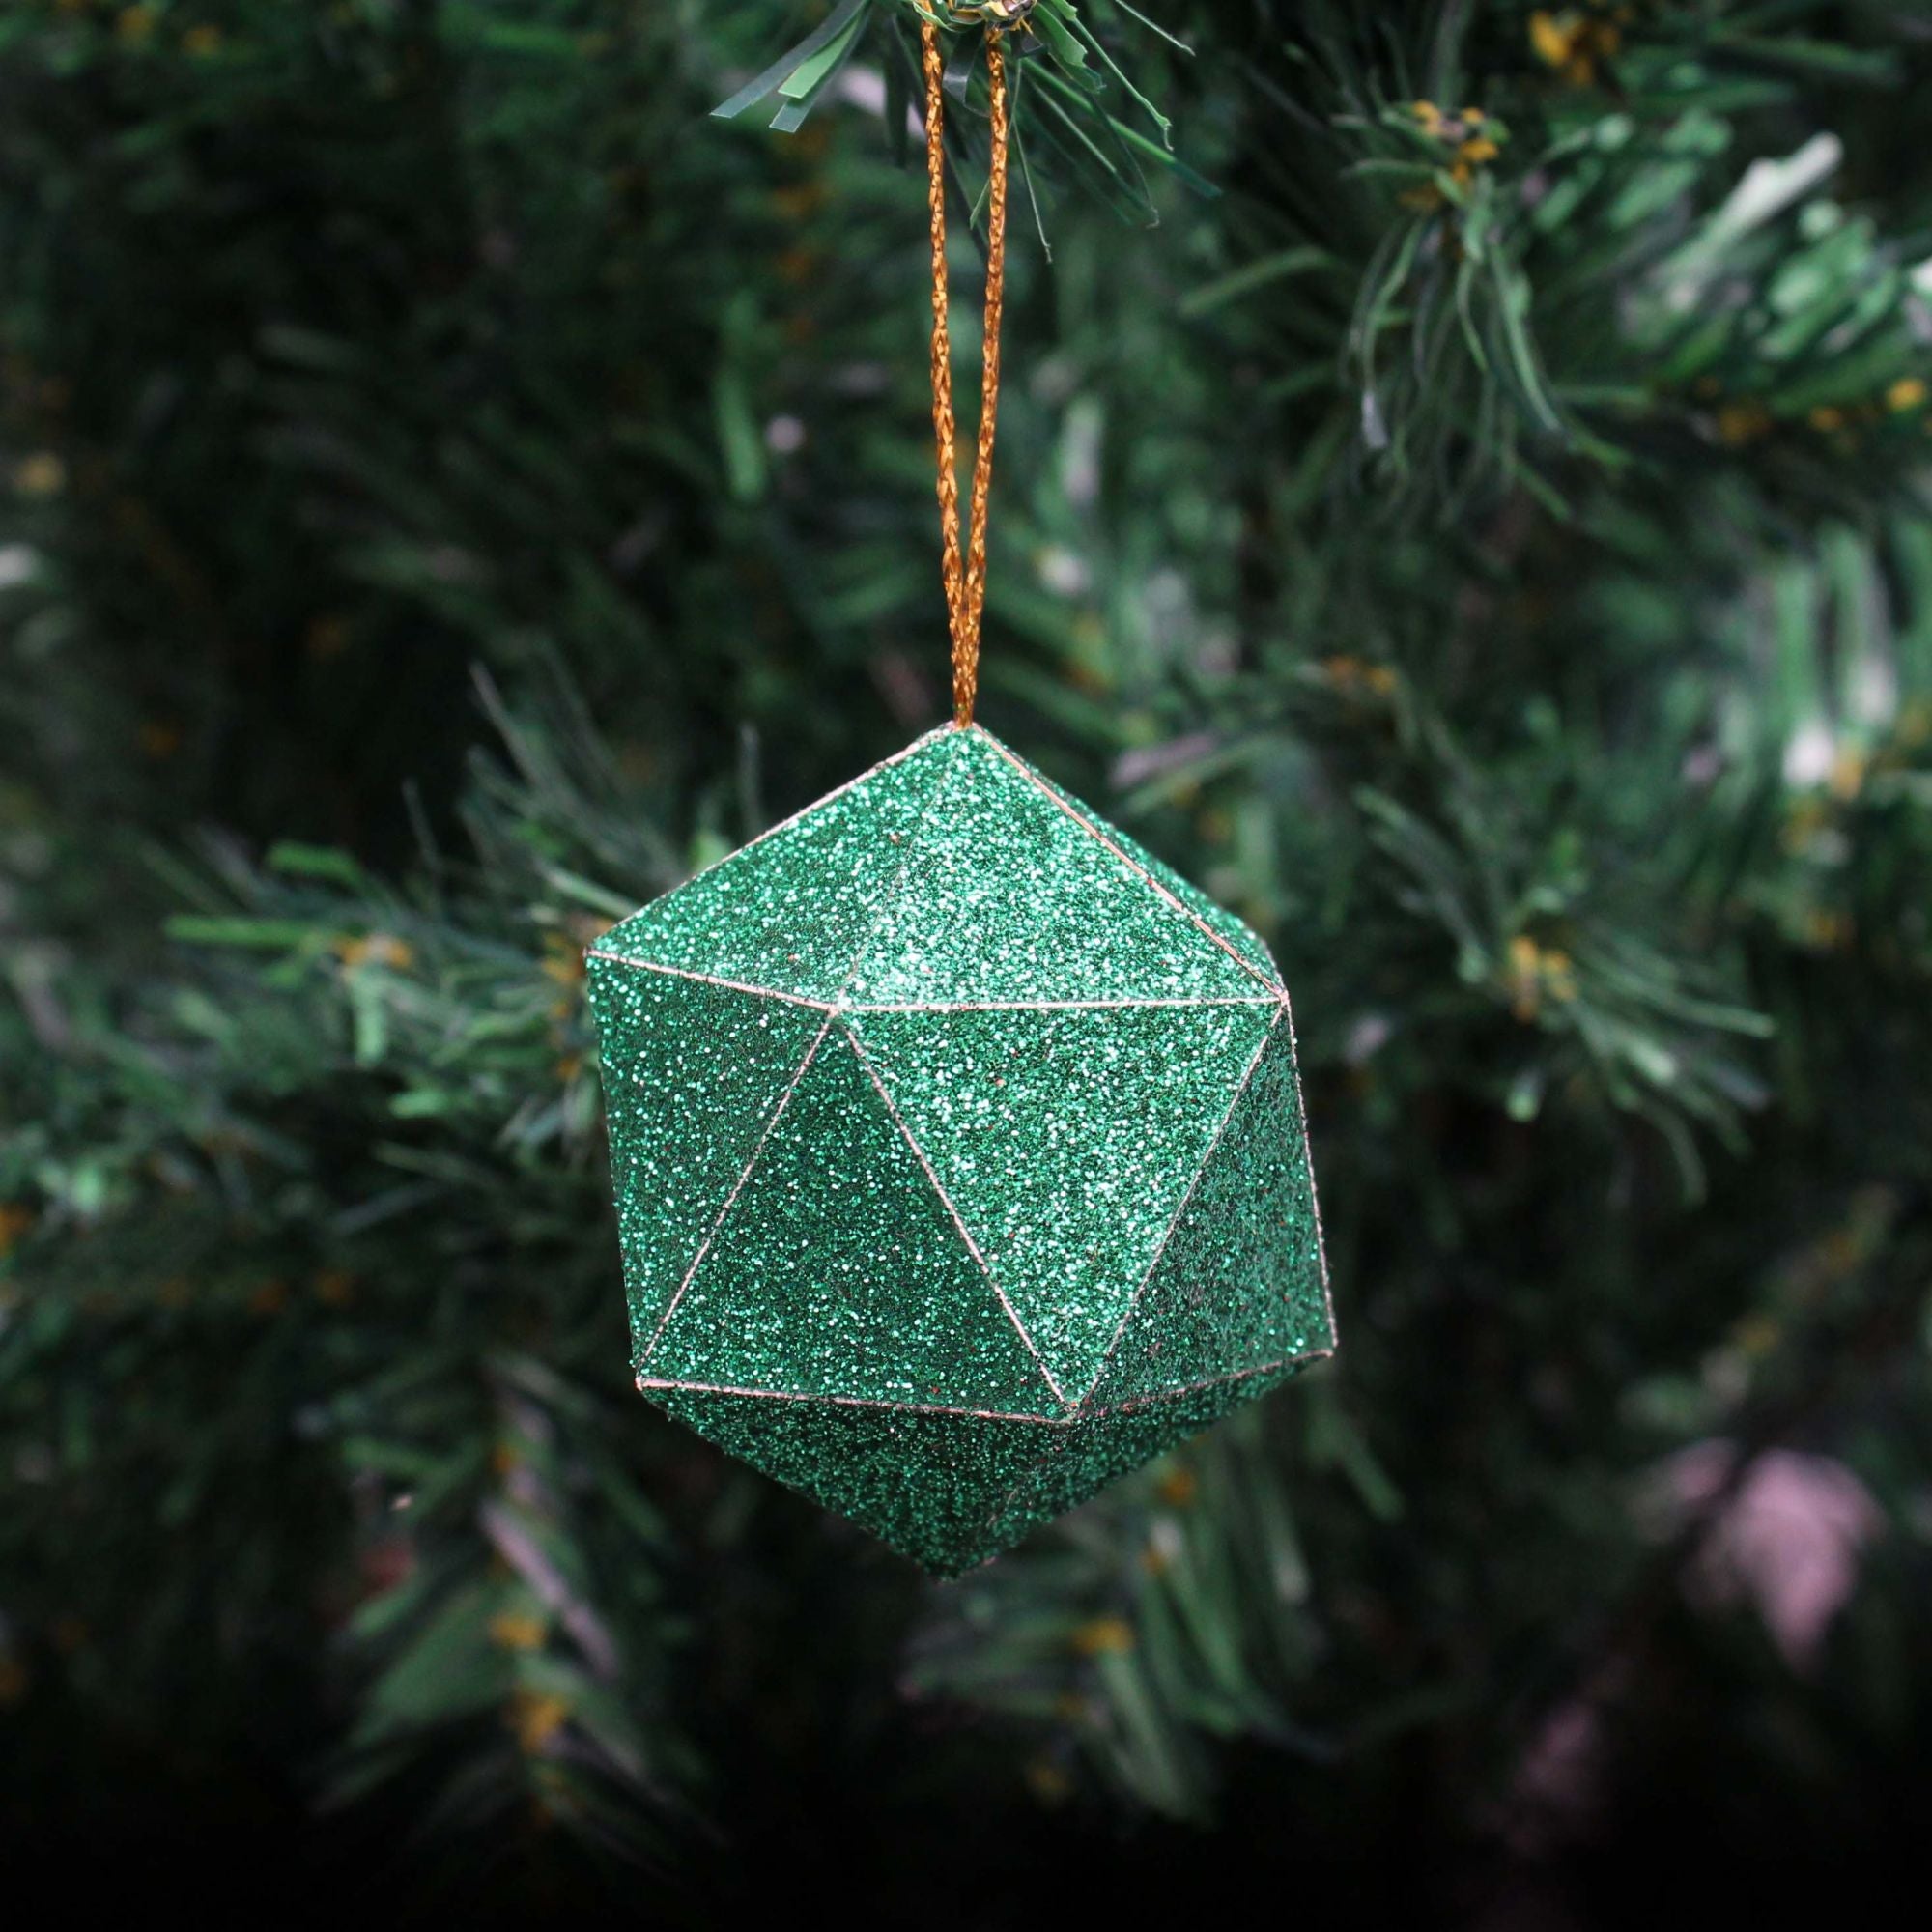 Handmade Christmas Trapezoid Hanging Glitter Ornaments, 45mm, Green, 8pc